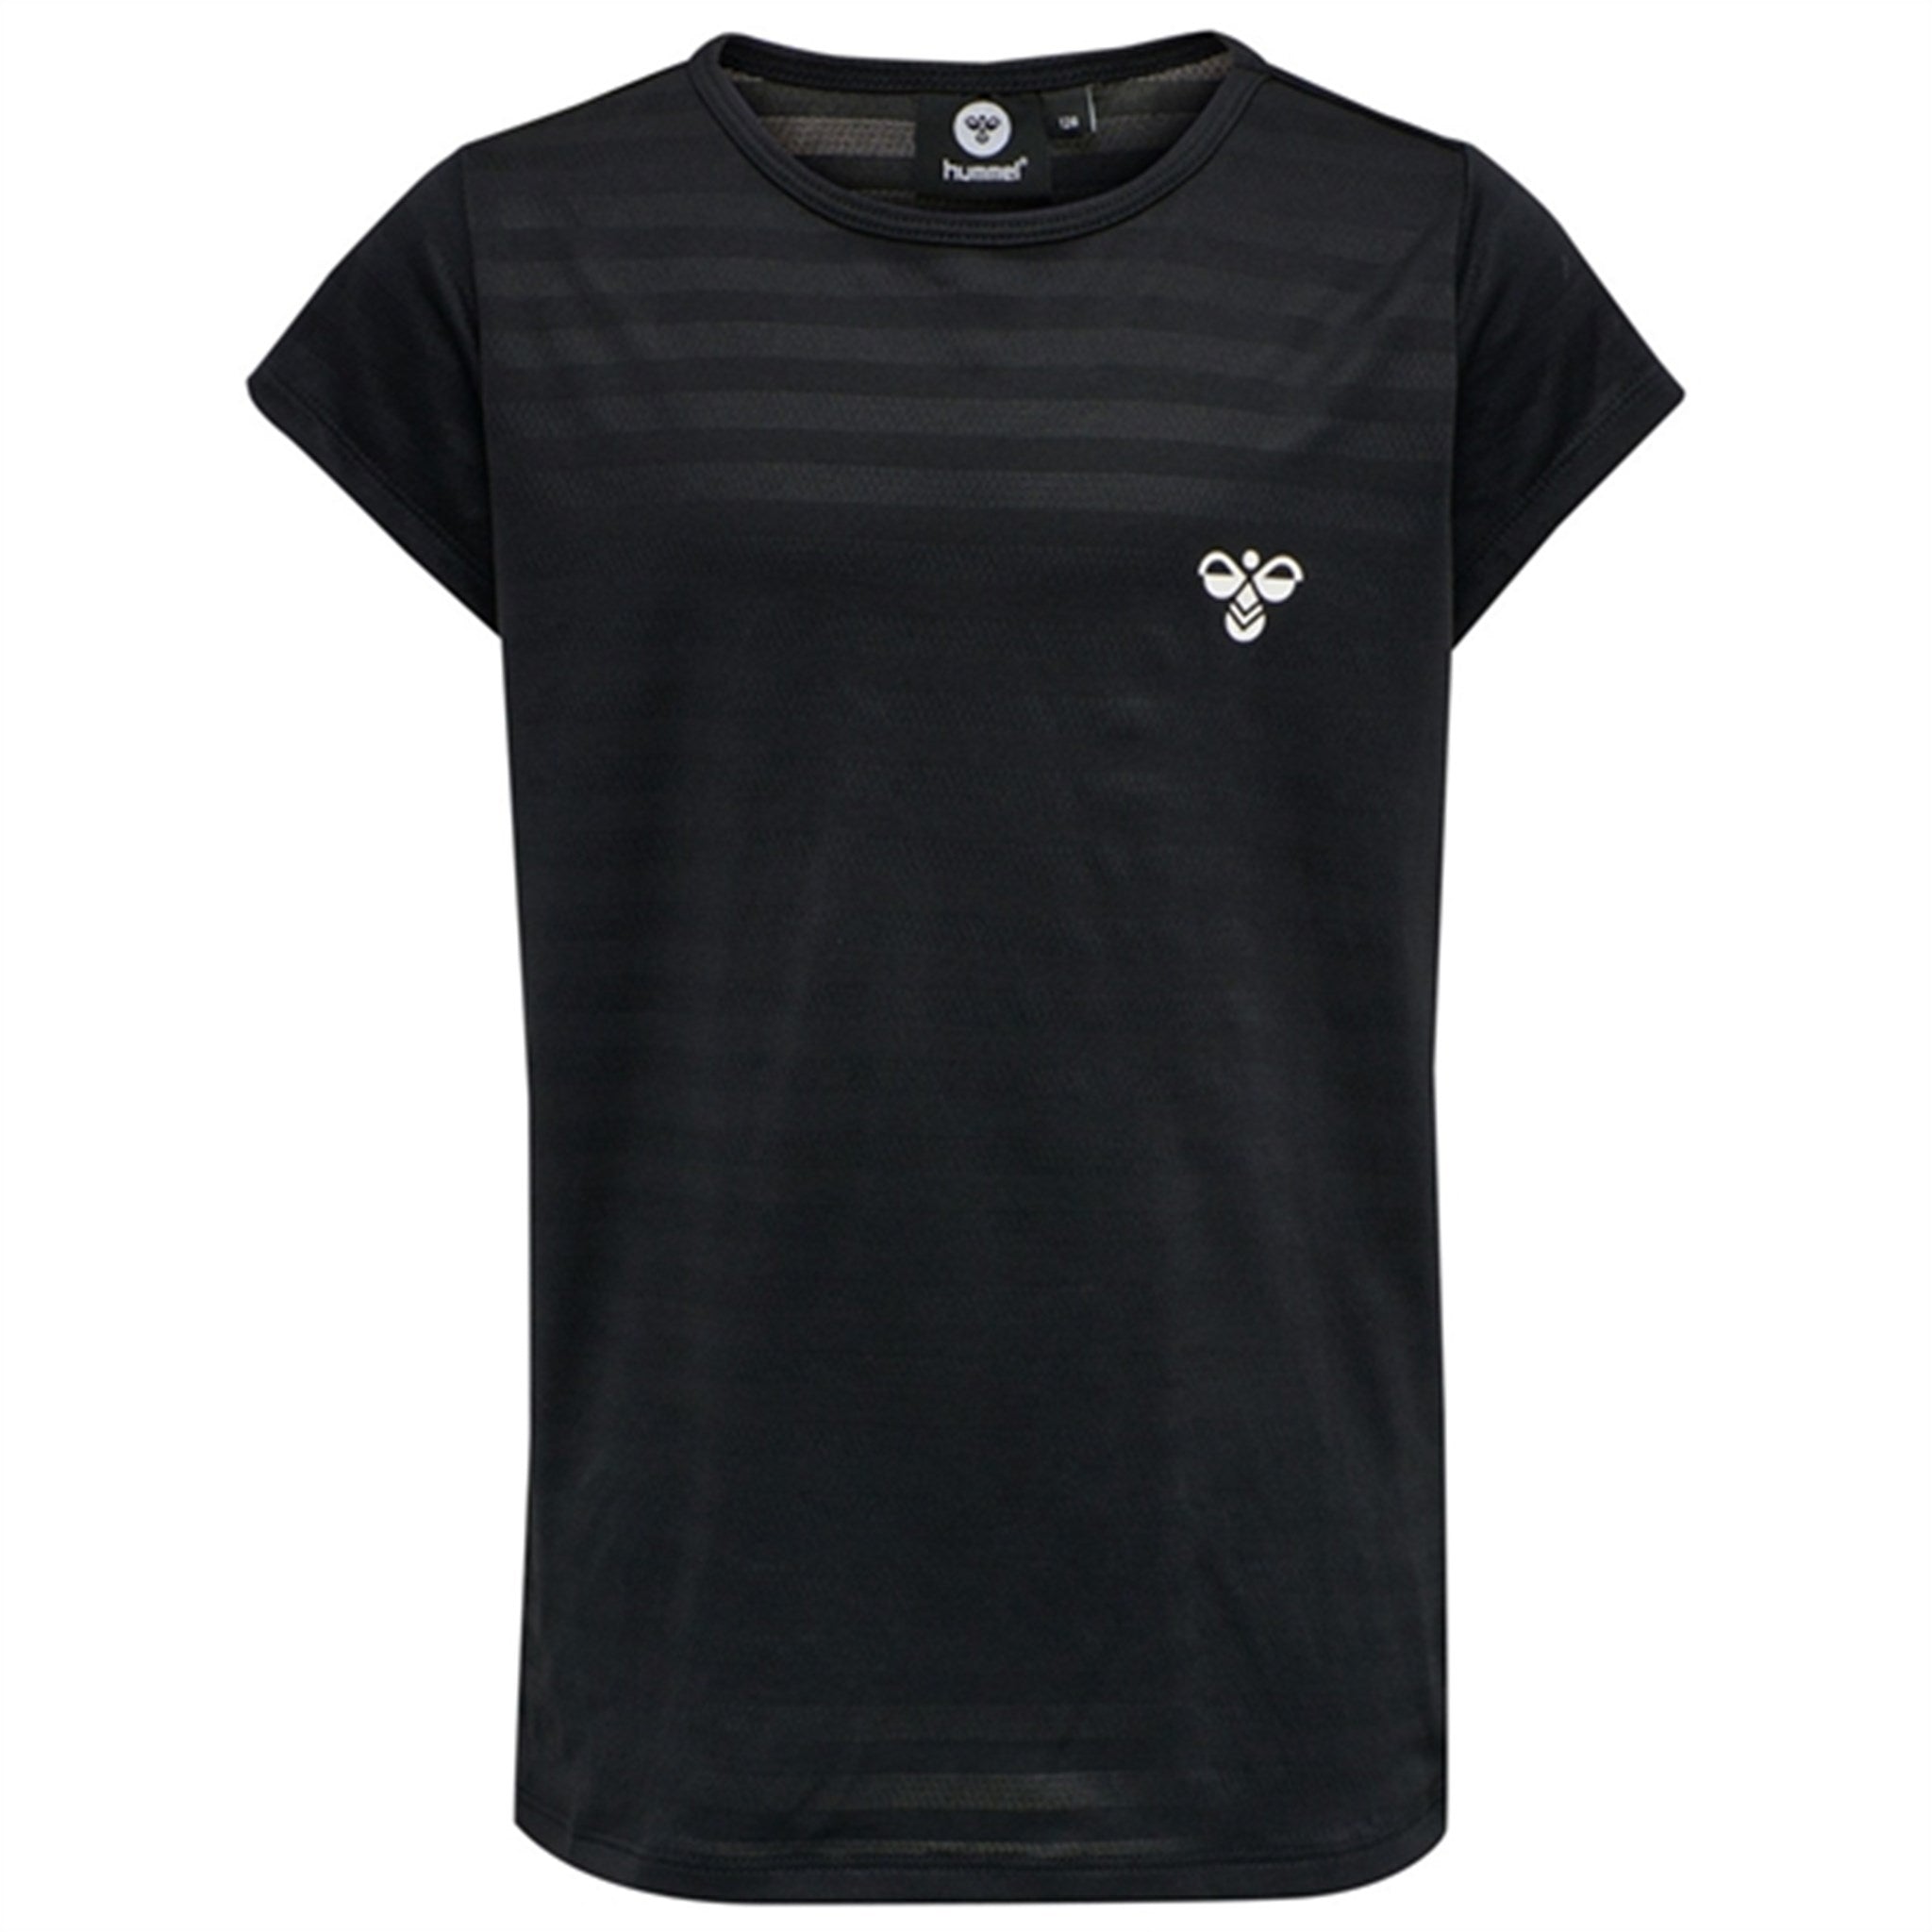 Hummel Black Nappkin T-Shirt